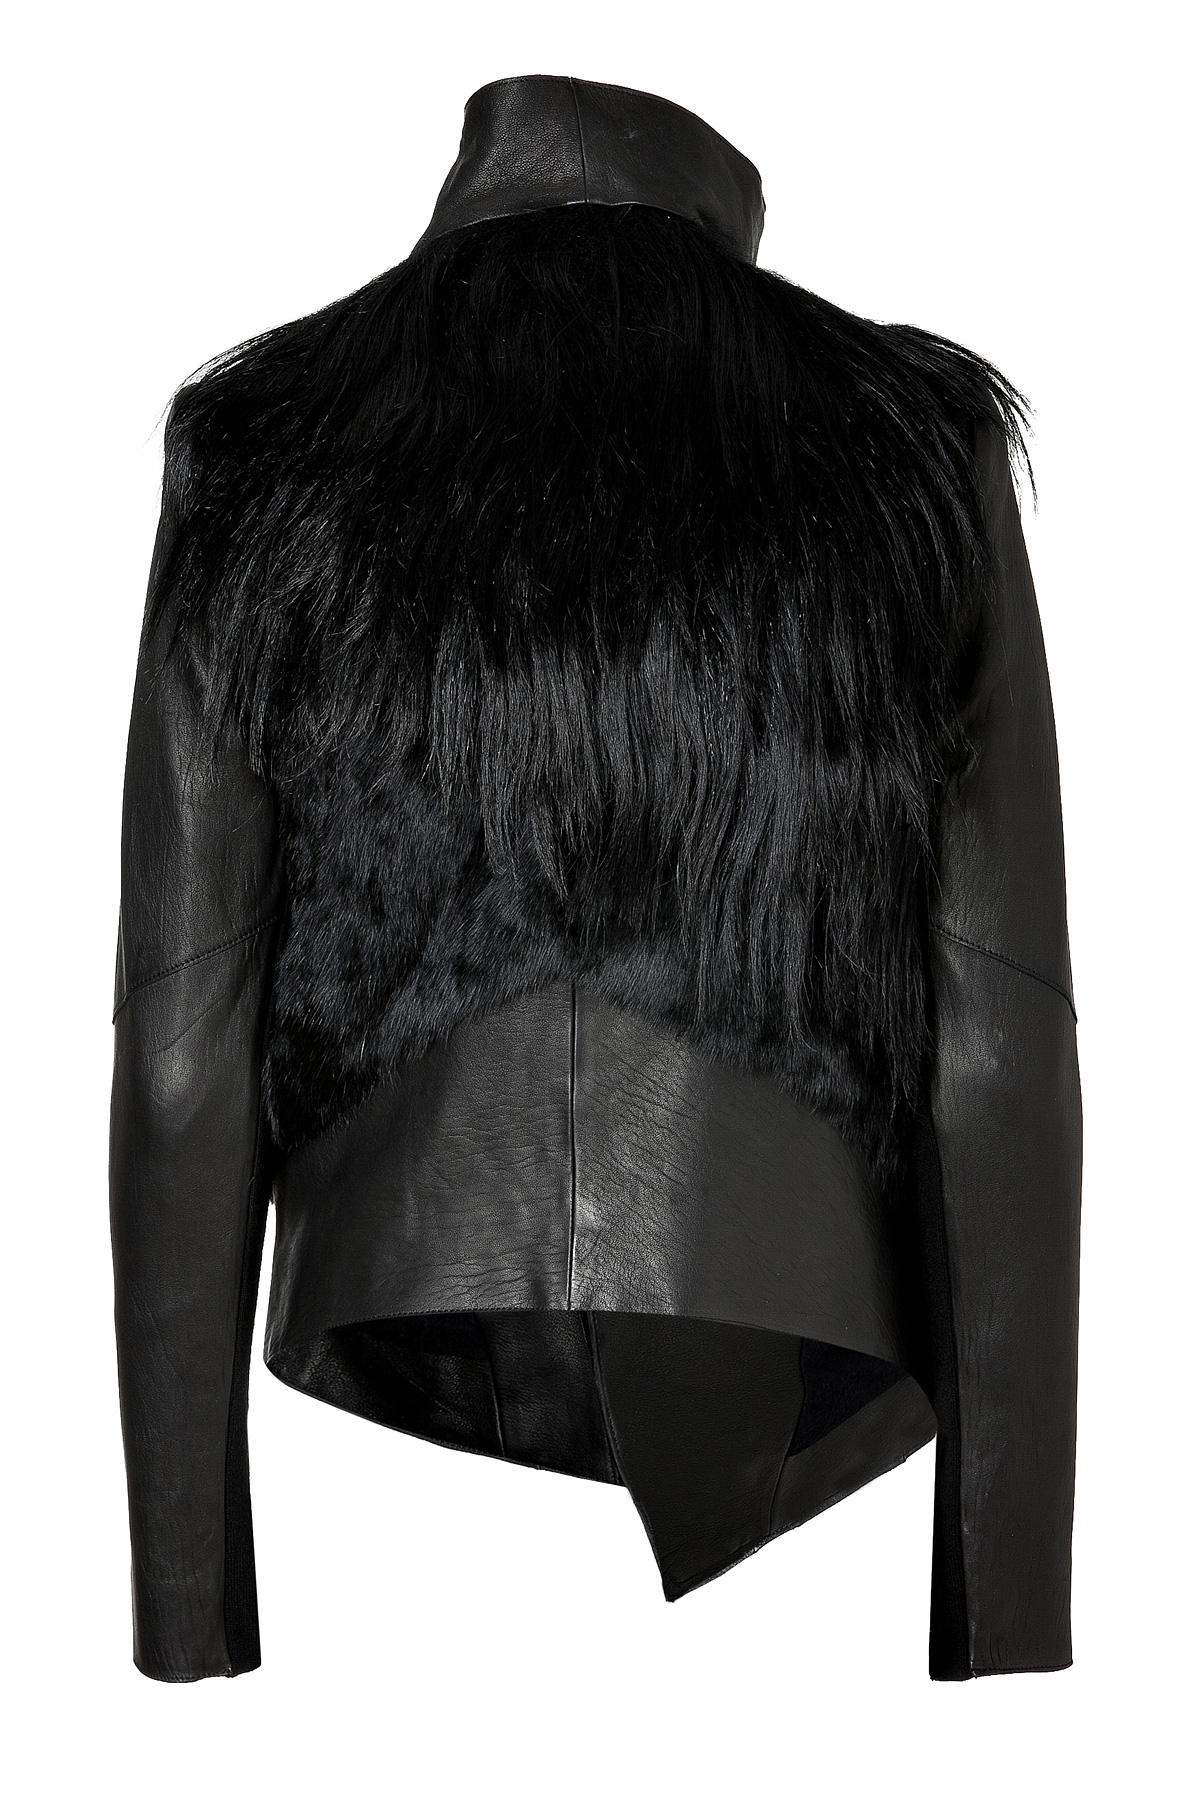 Lyst - Helmut Lang Black Combo Leather Fur Jacket in Black